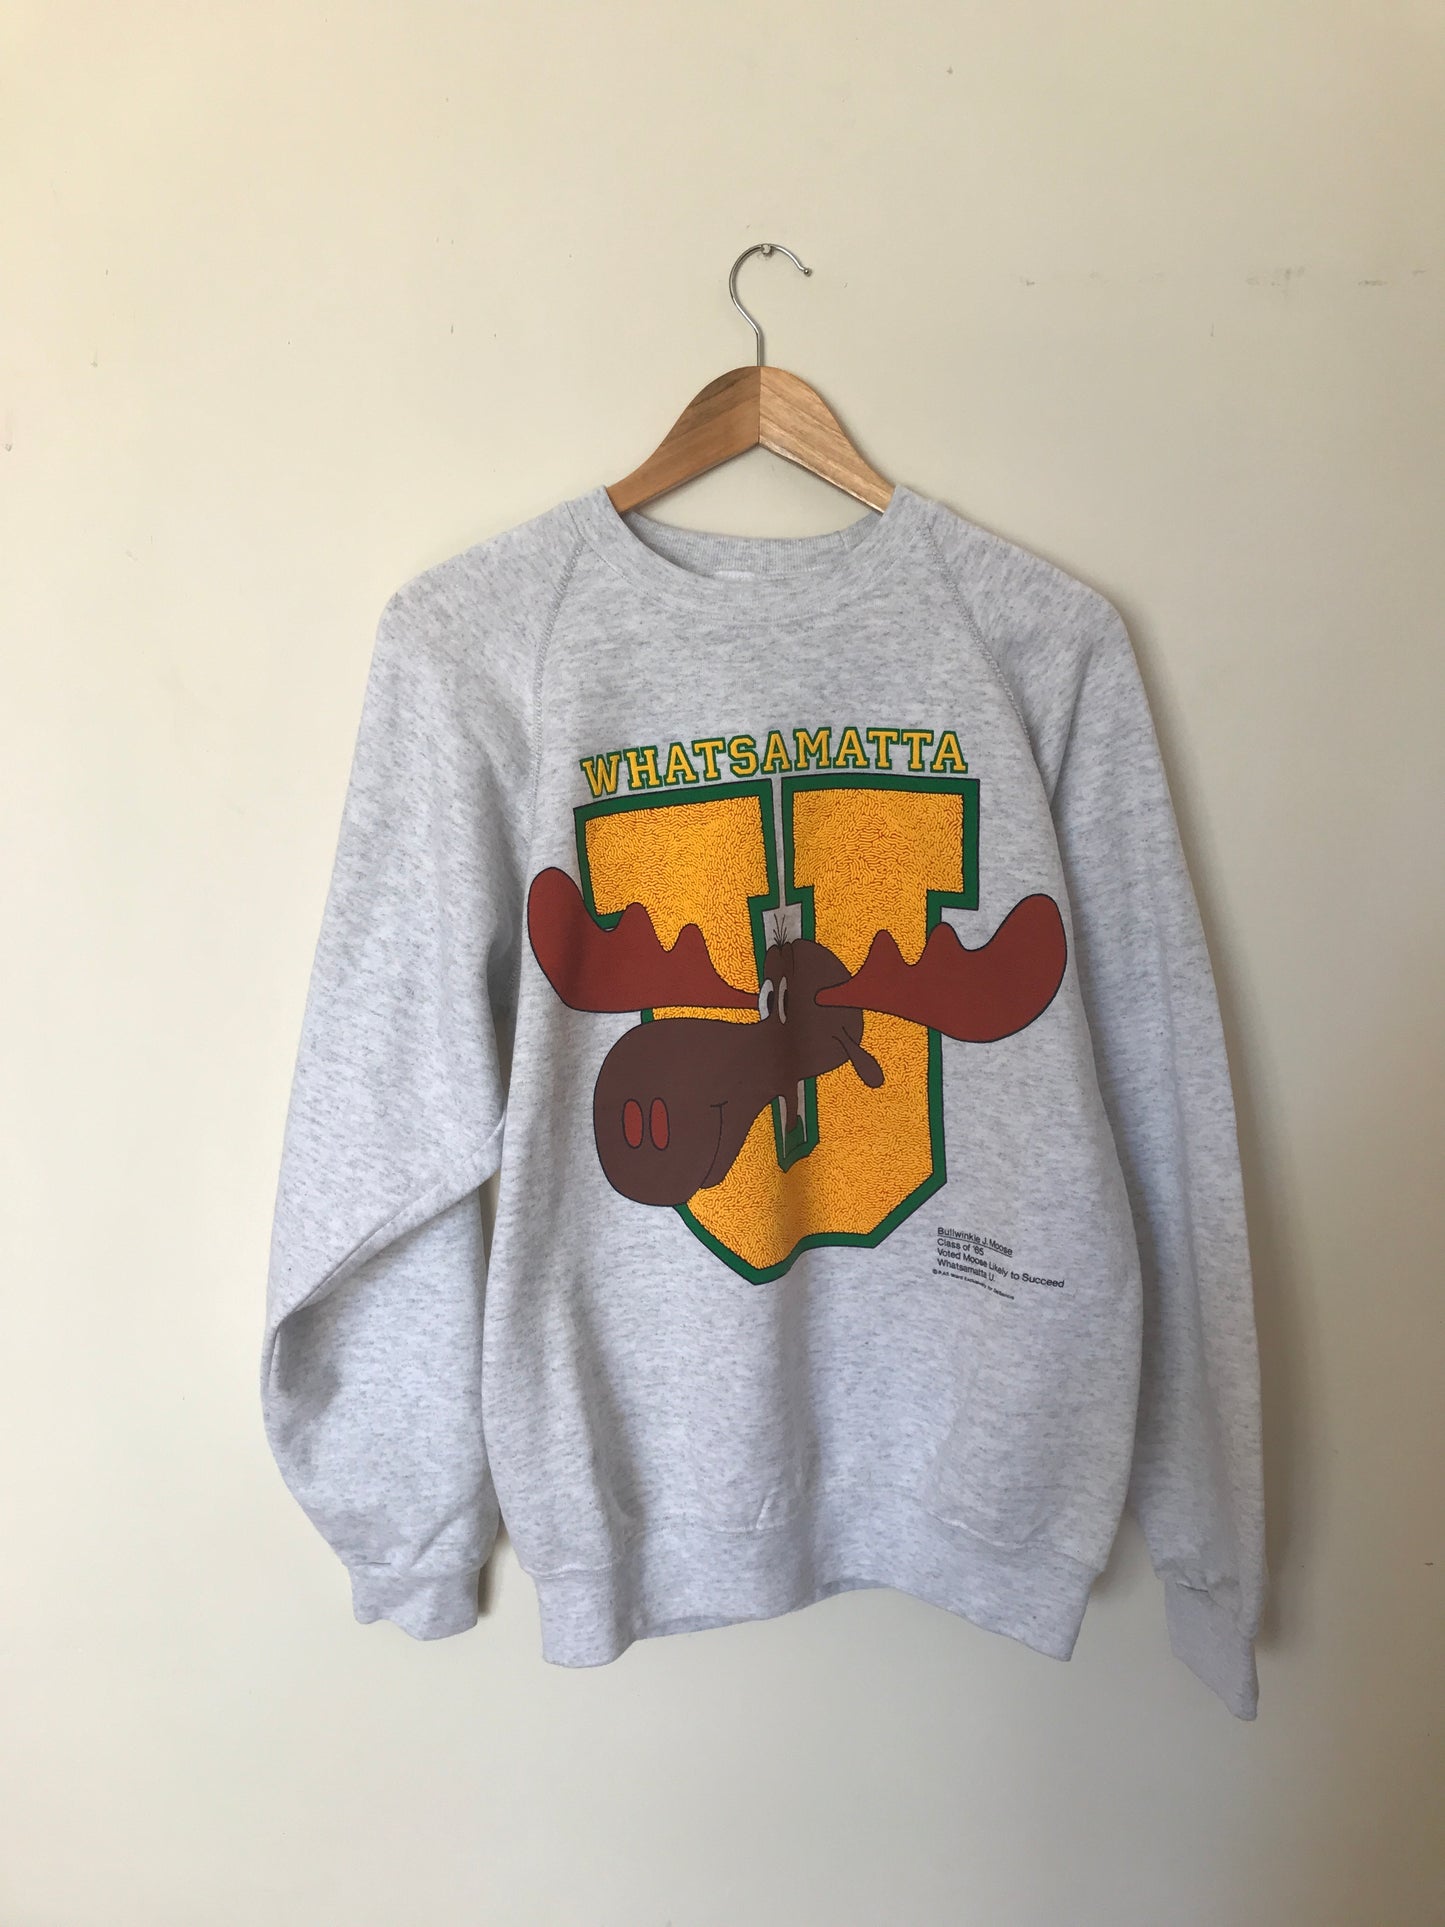 Vintage Whatsamatta Sweatshirt